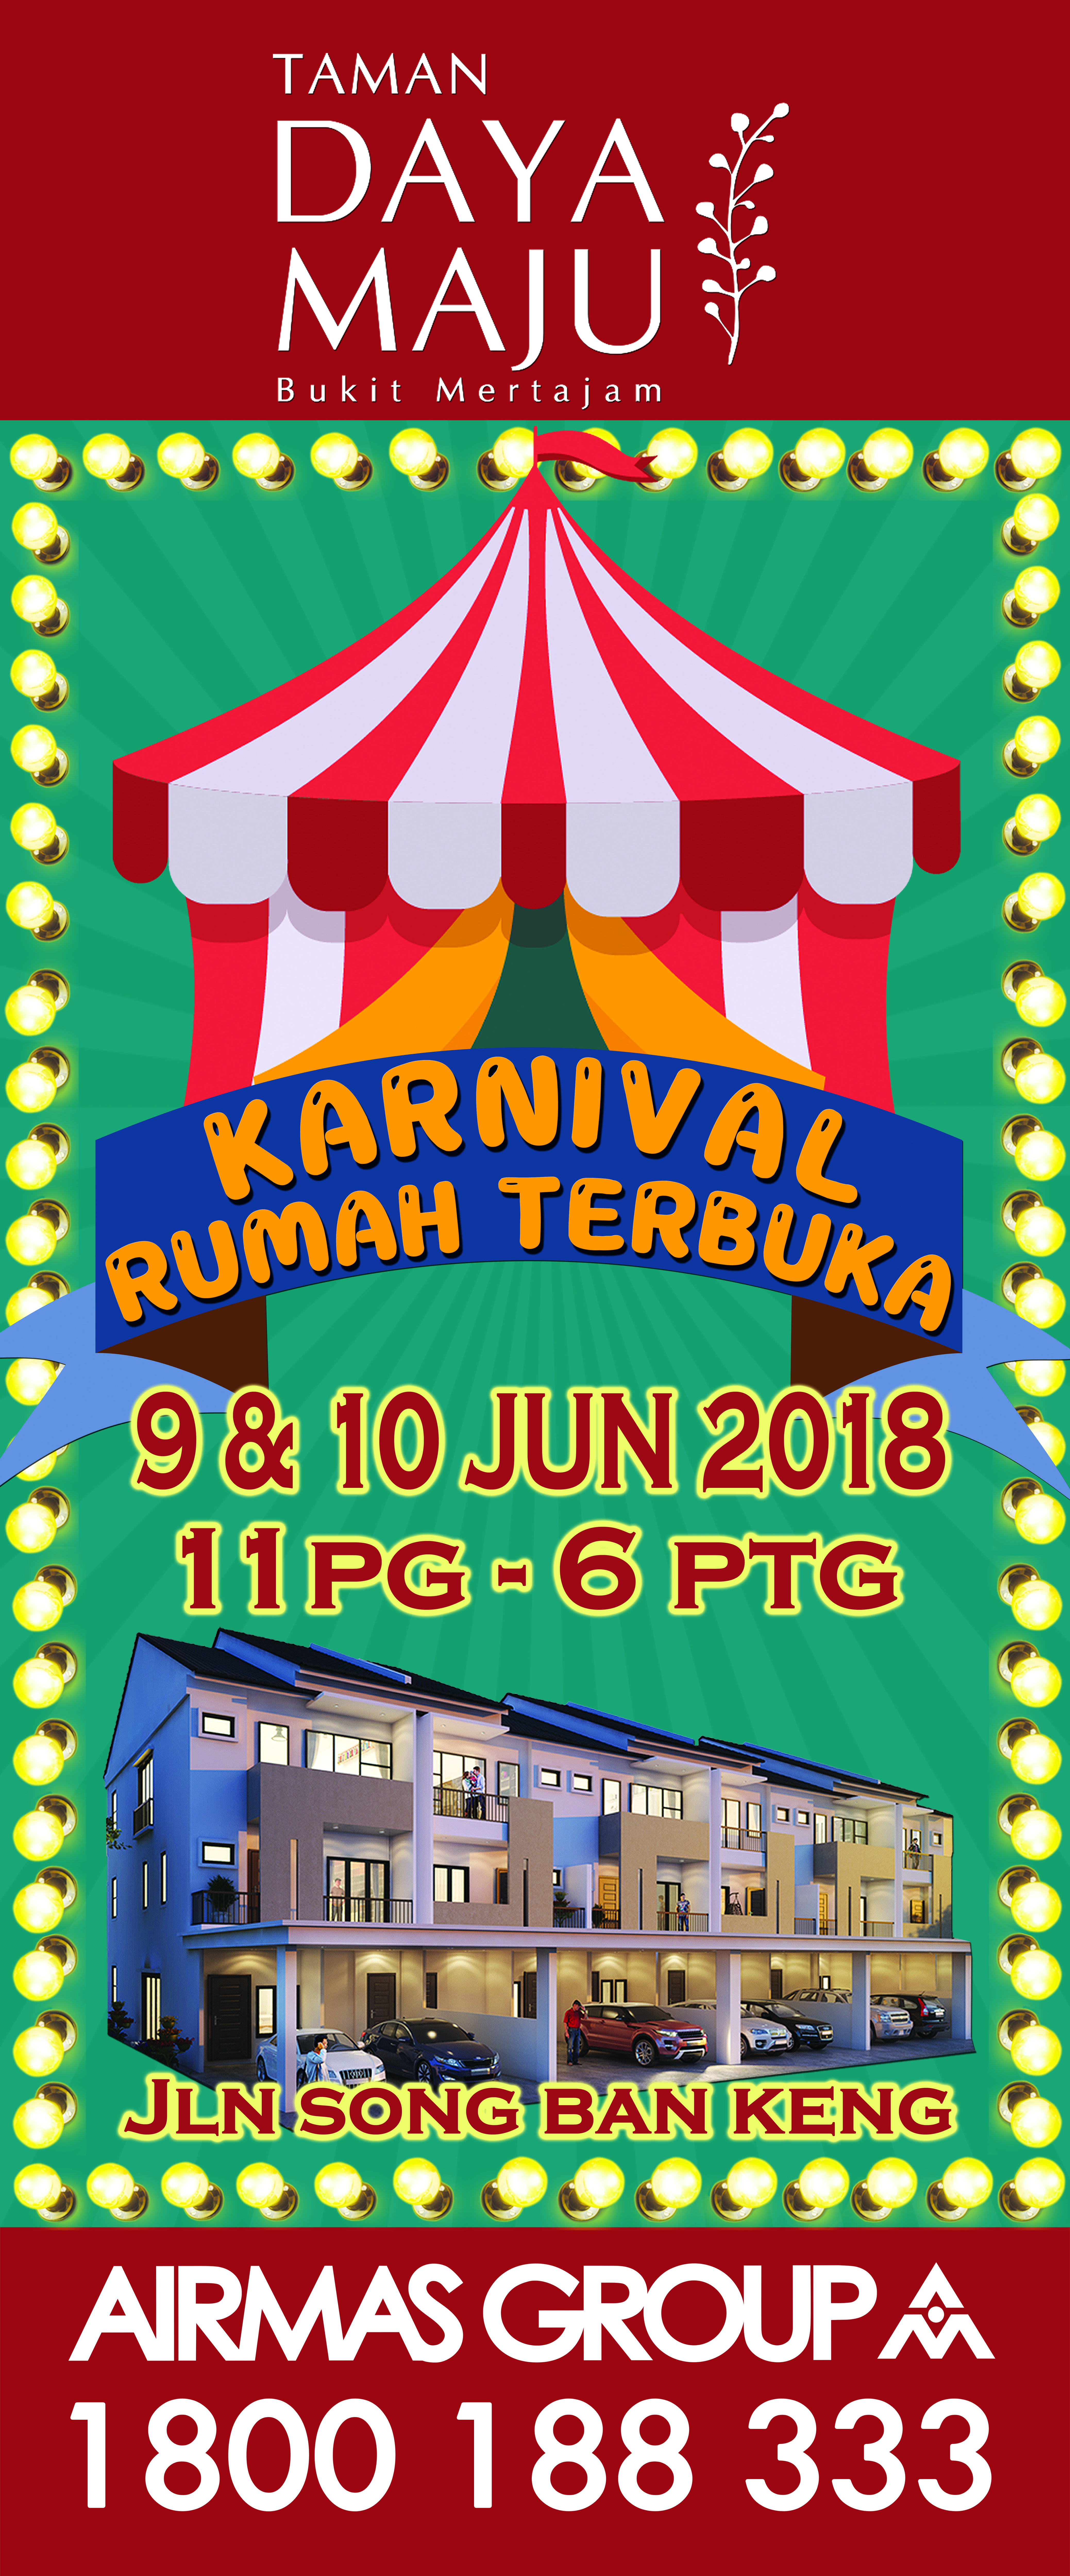 Taman Day Maju open house carnival poster